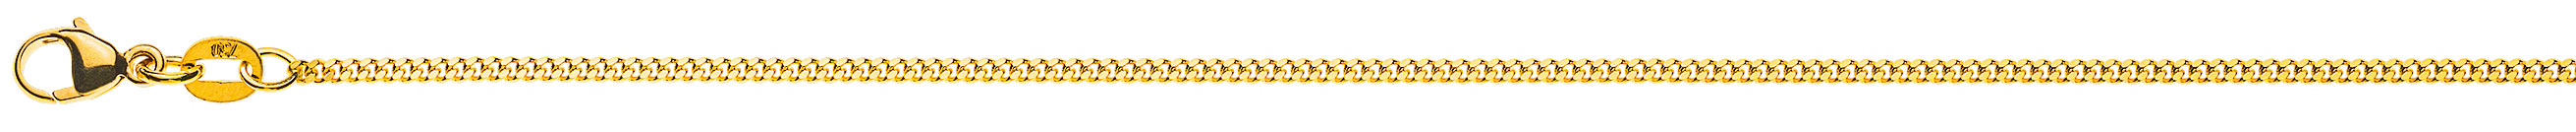 AURONOS Prestige Necklace yellow gold 18K curb chain polished 38cm 1.6mm